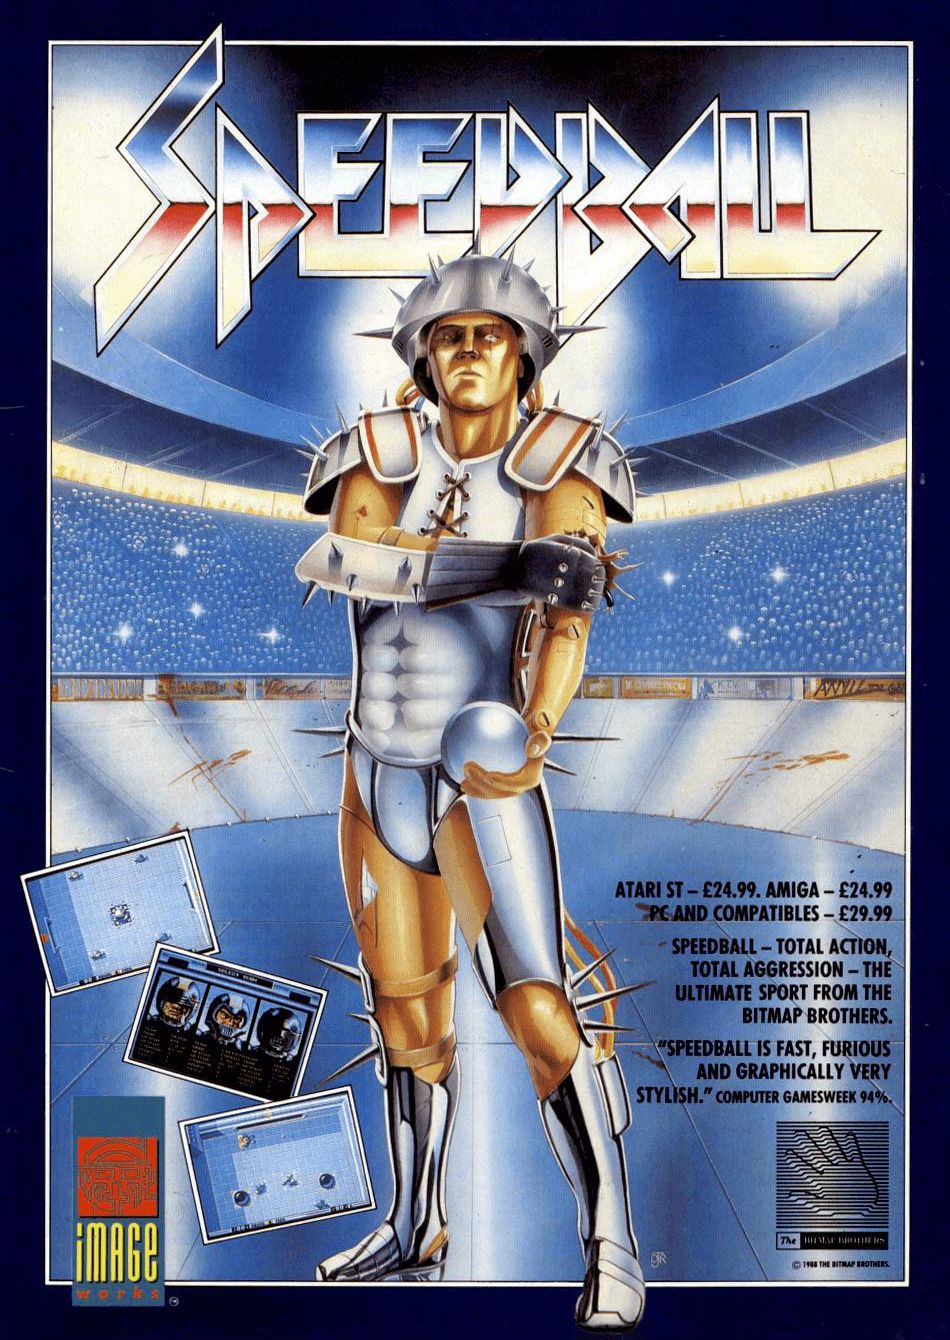 Speedball (1988) © The Bitmap Brothers